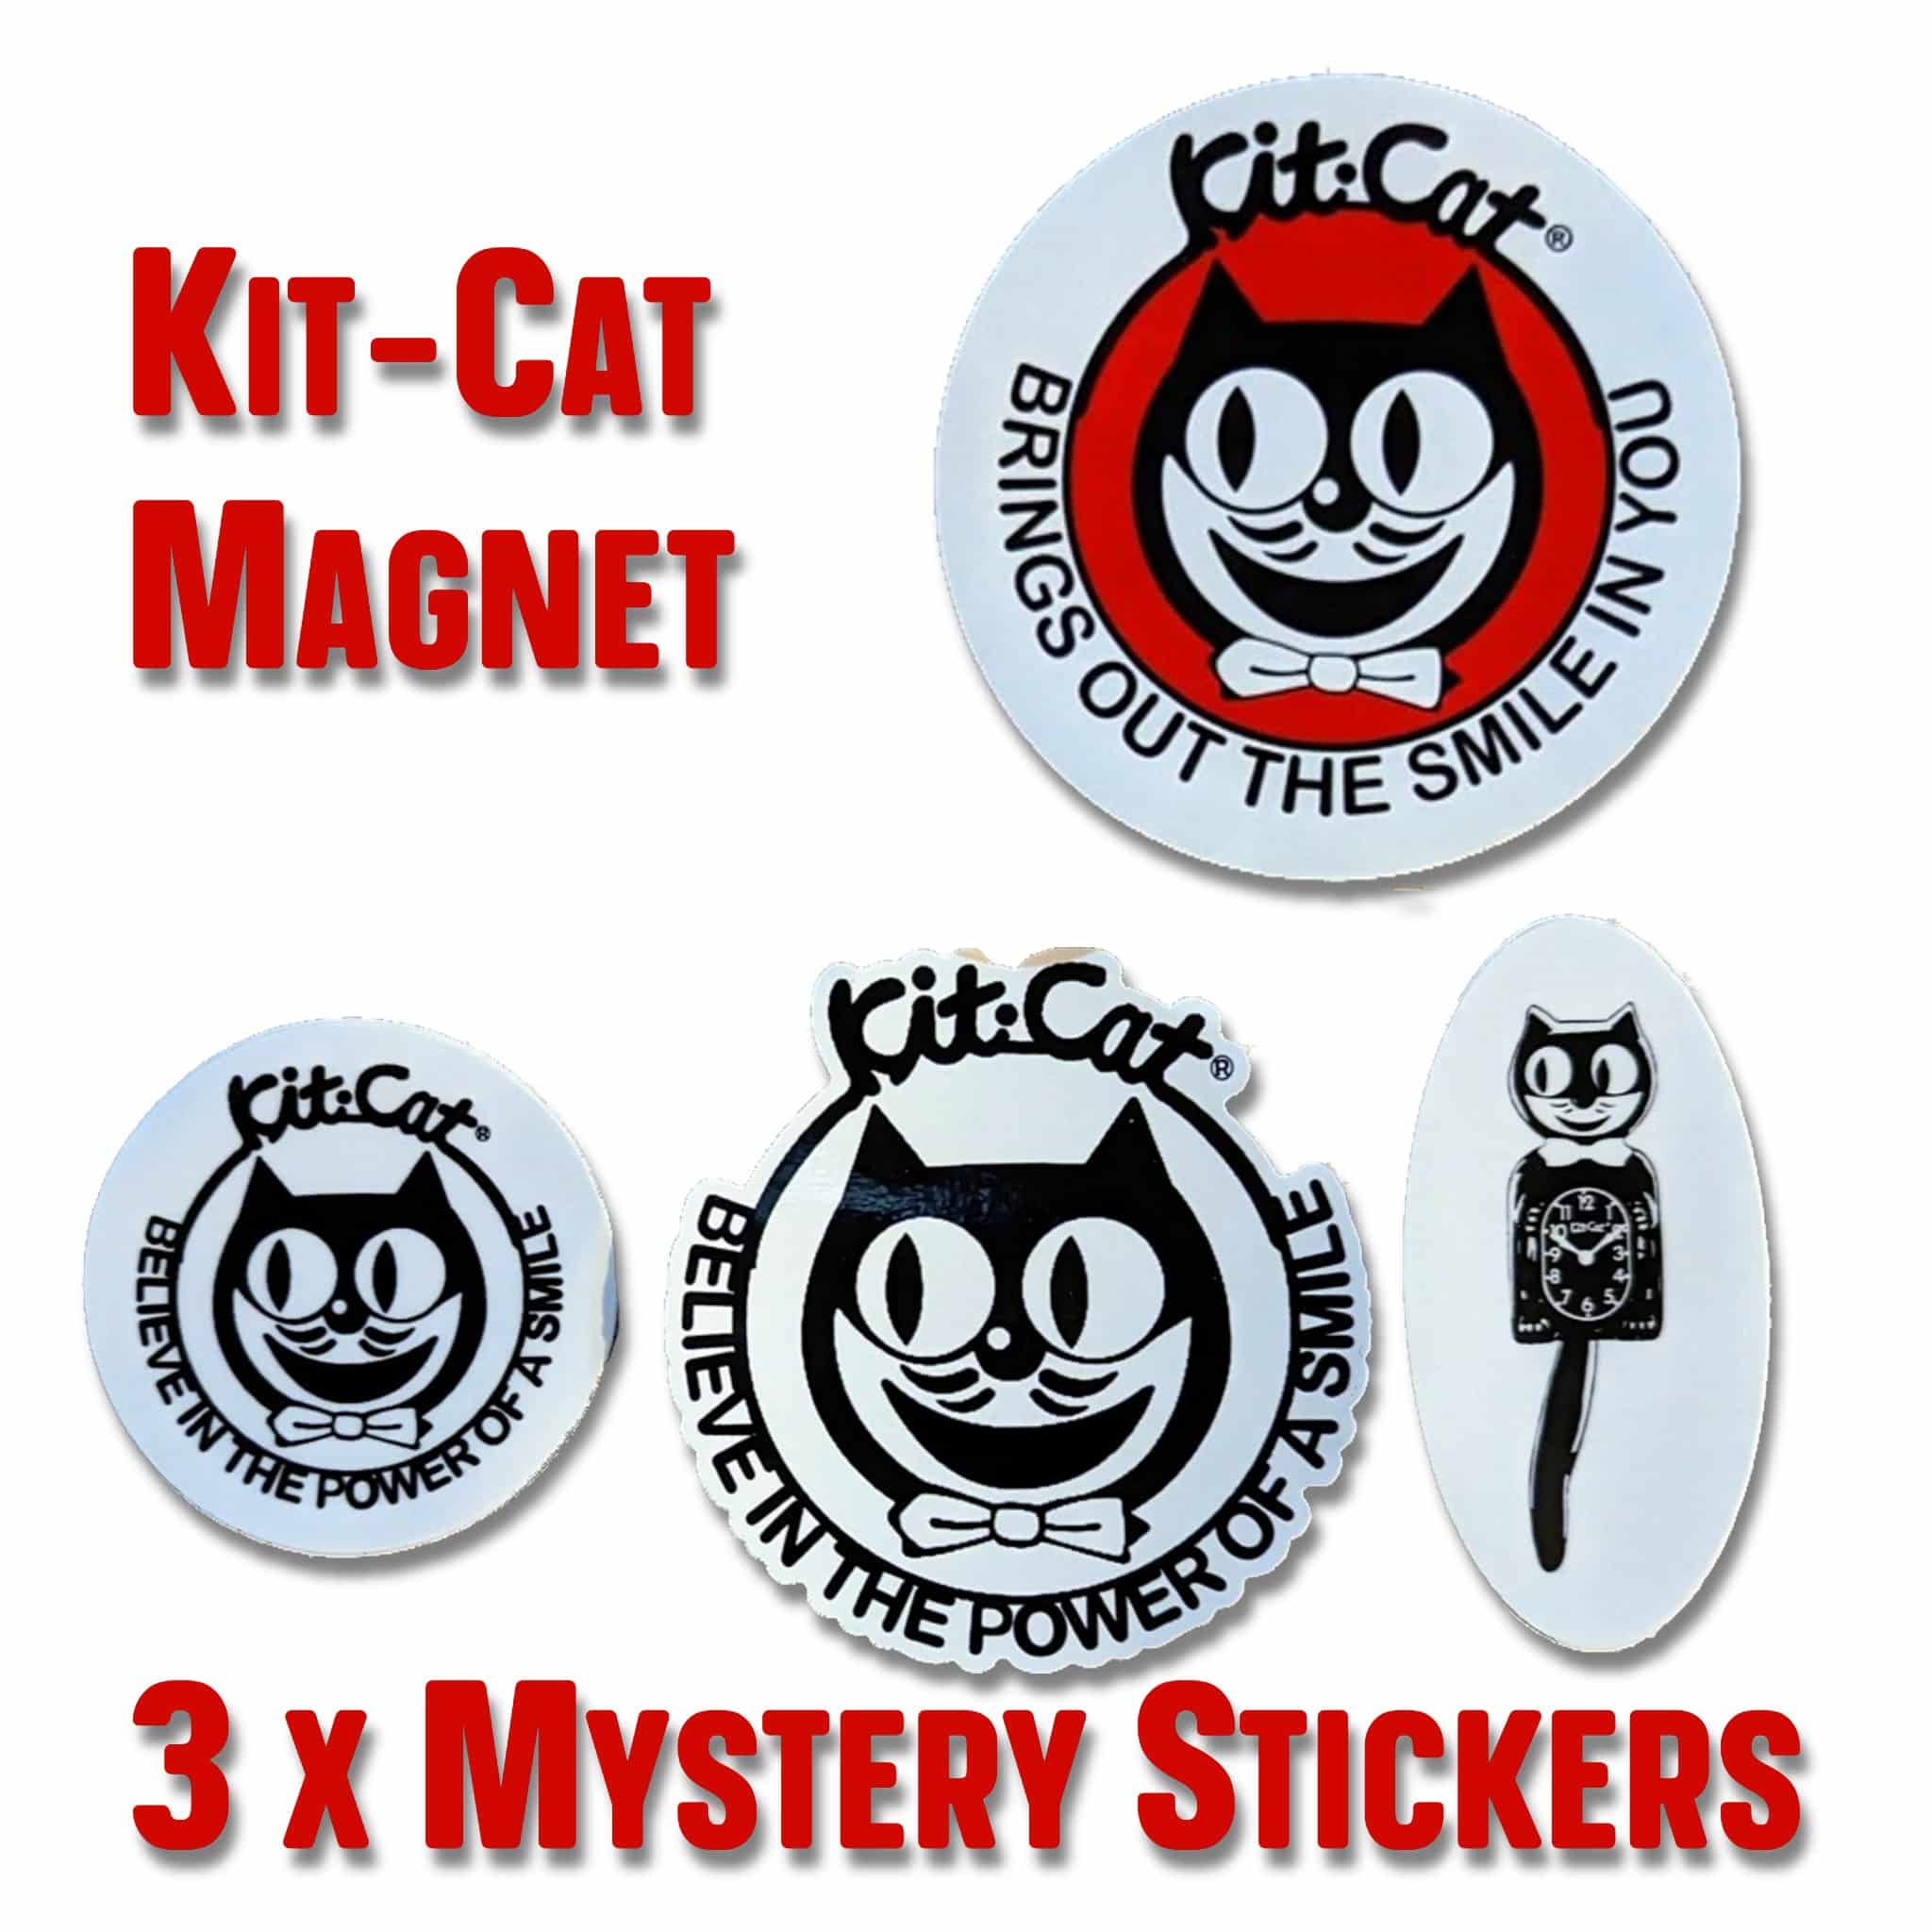 https://kit-cat.com/wp-content/uploads/2023/01/Kit-Cat-sticker-and-magnet-pack.jpg